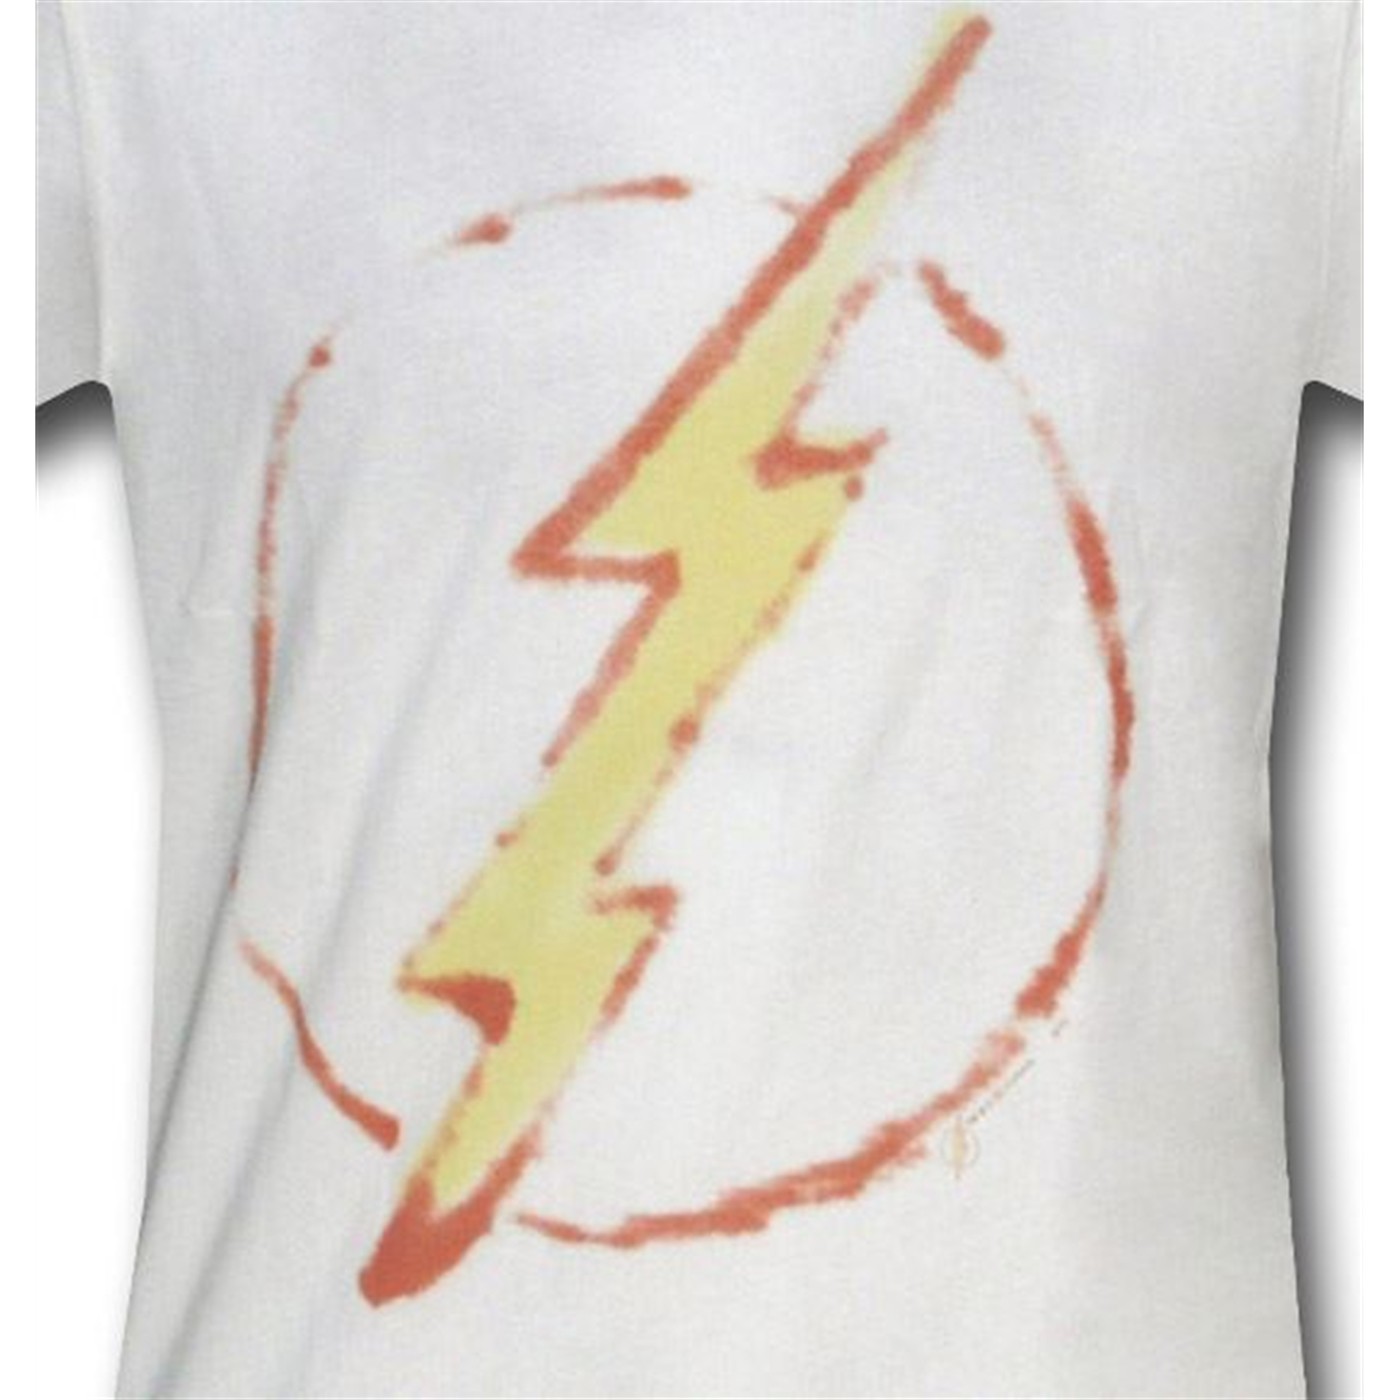 Flash Extreme Washed Logo Junk Food T-Shirt